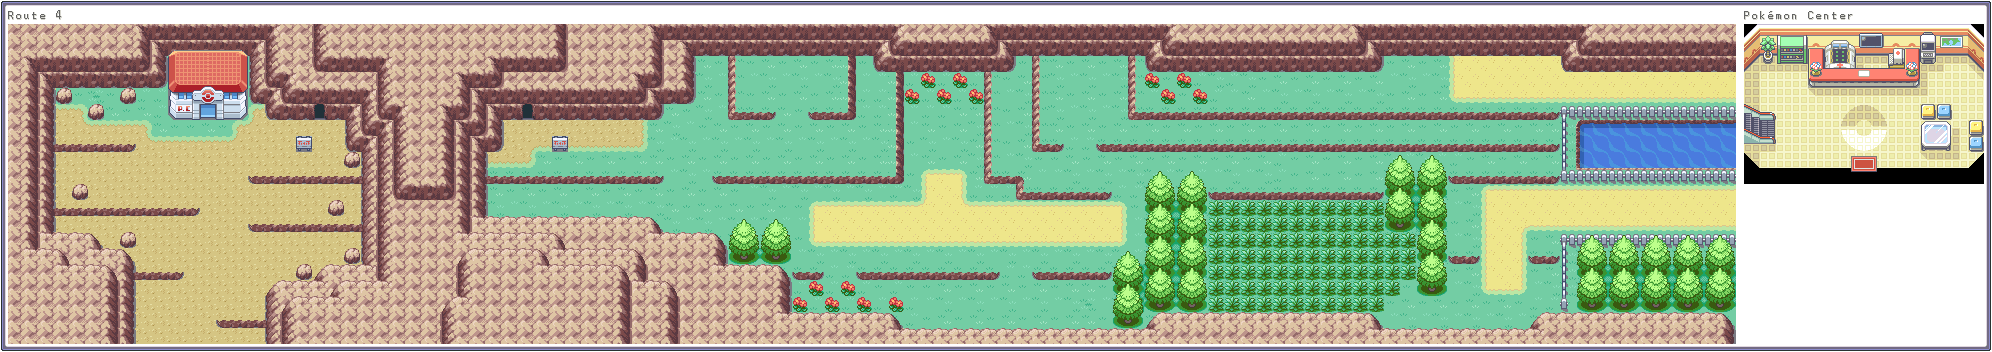 Pokémon FireRed / LeafGreen - Route 04